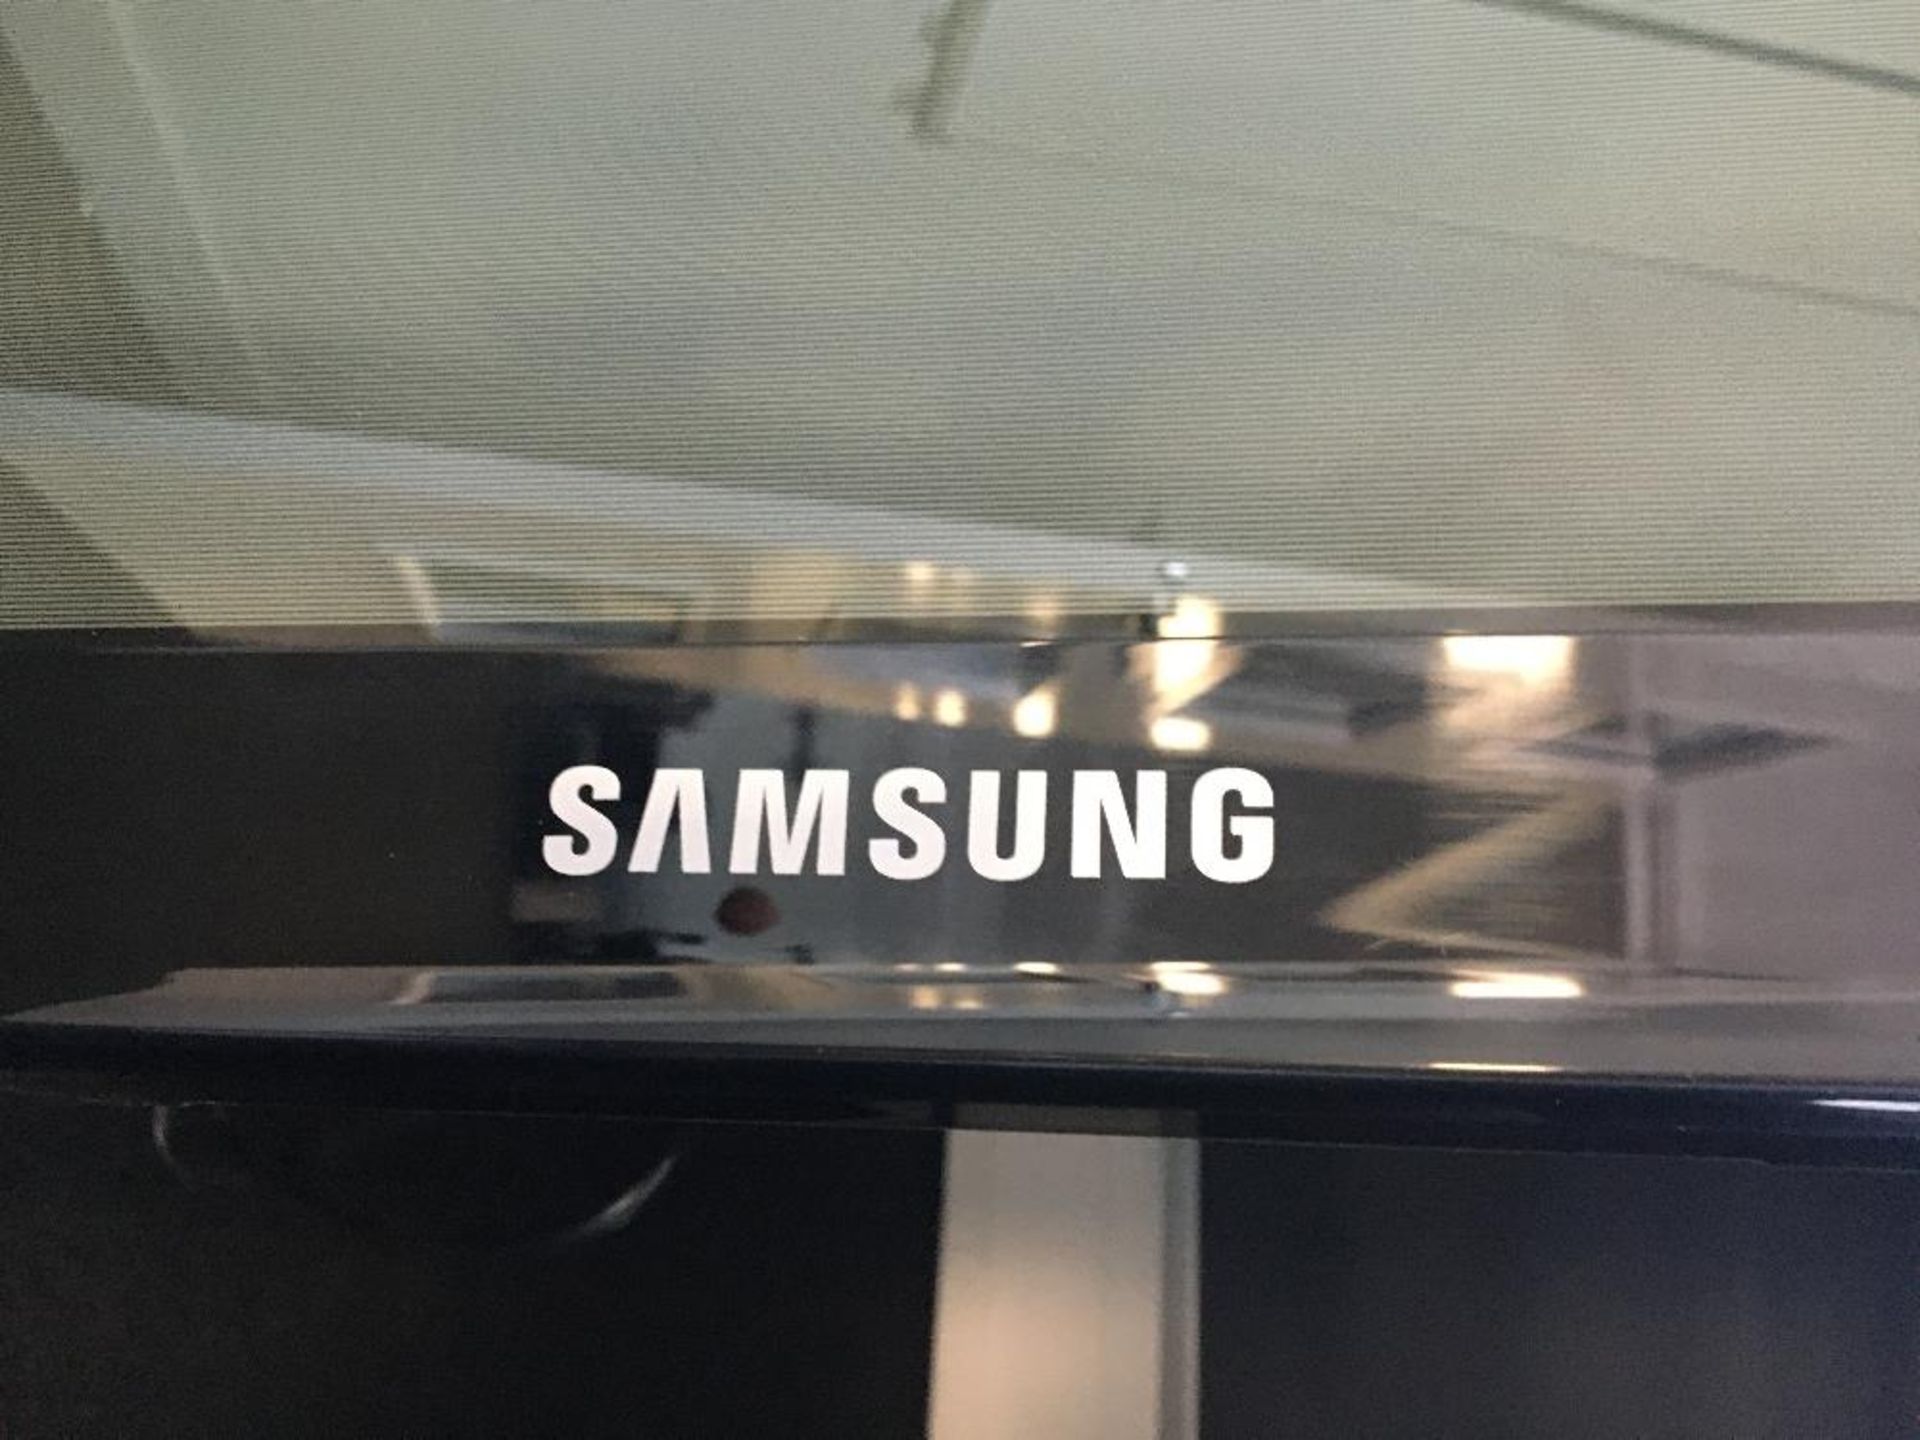 Samsung 51" wall mounted flatscreen TV - Image 2 of 2